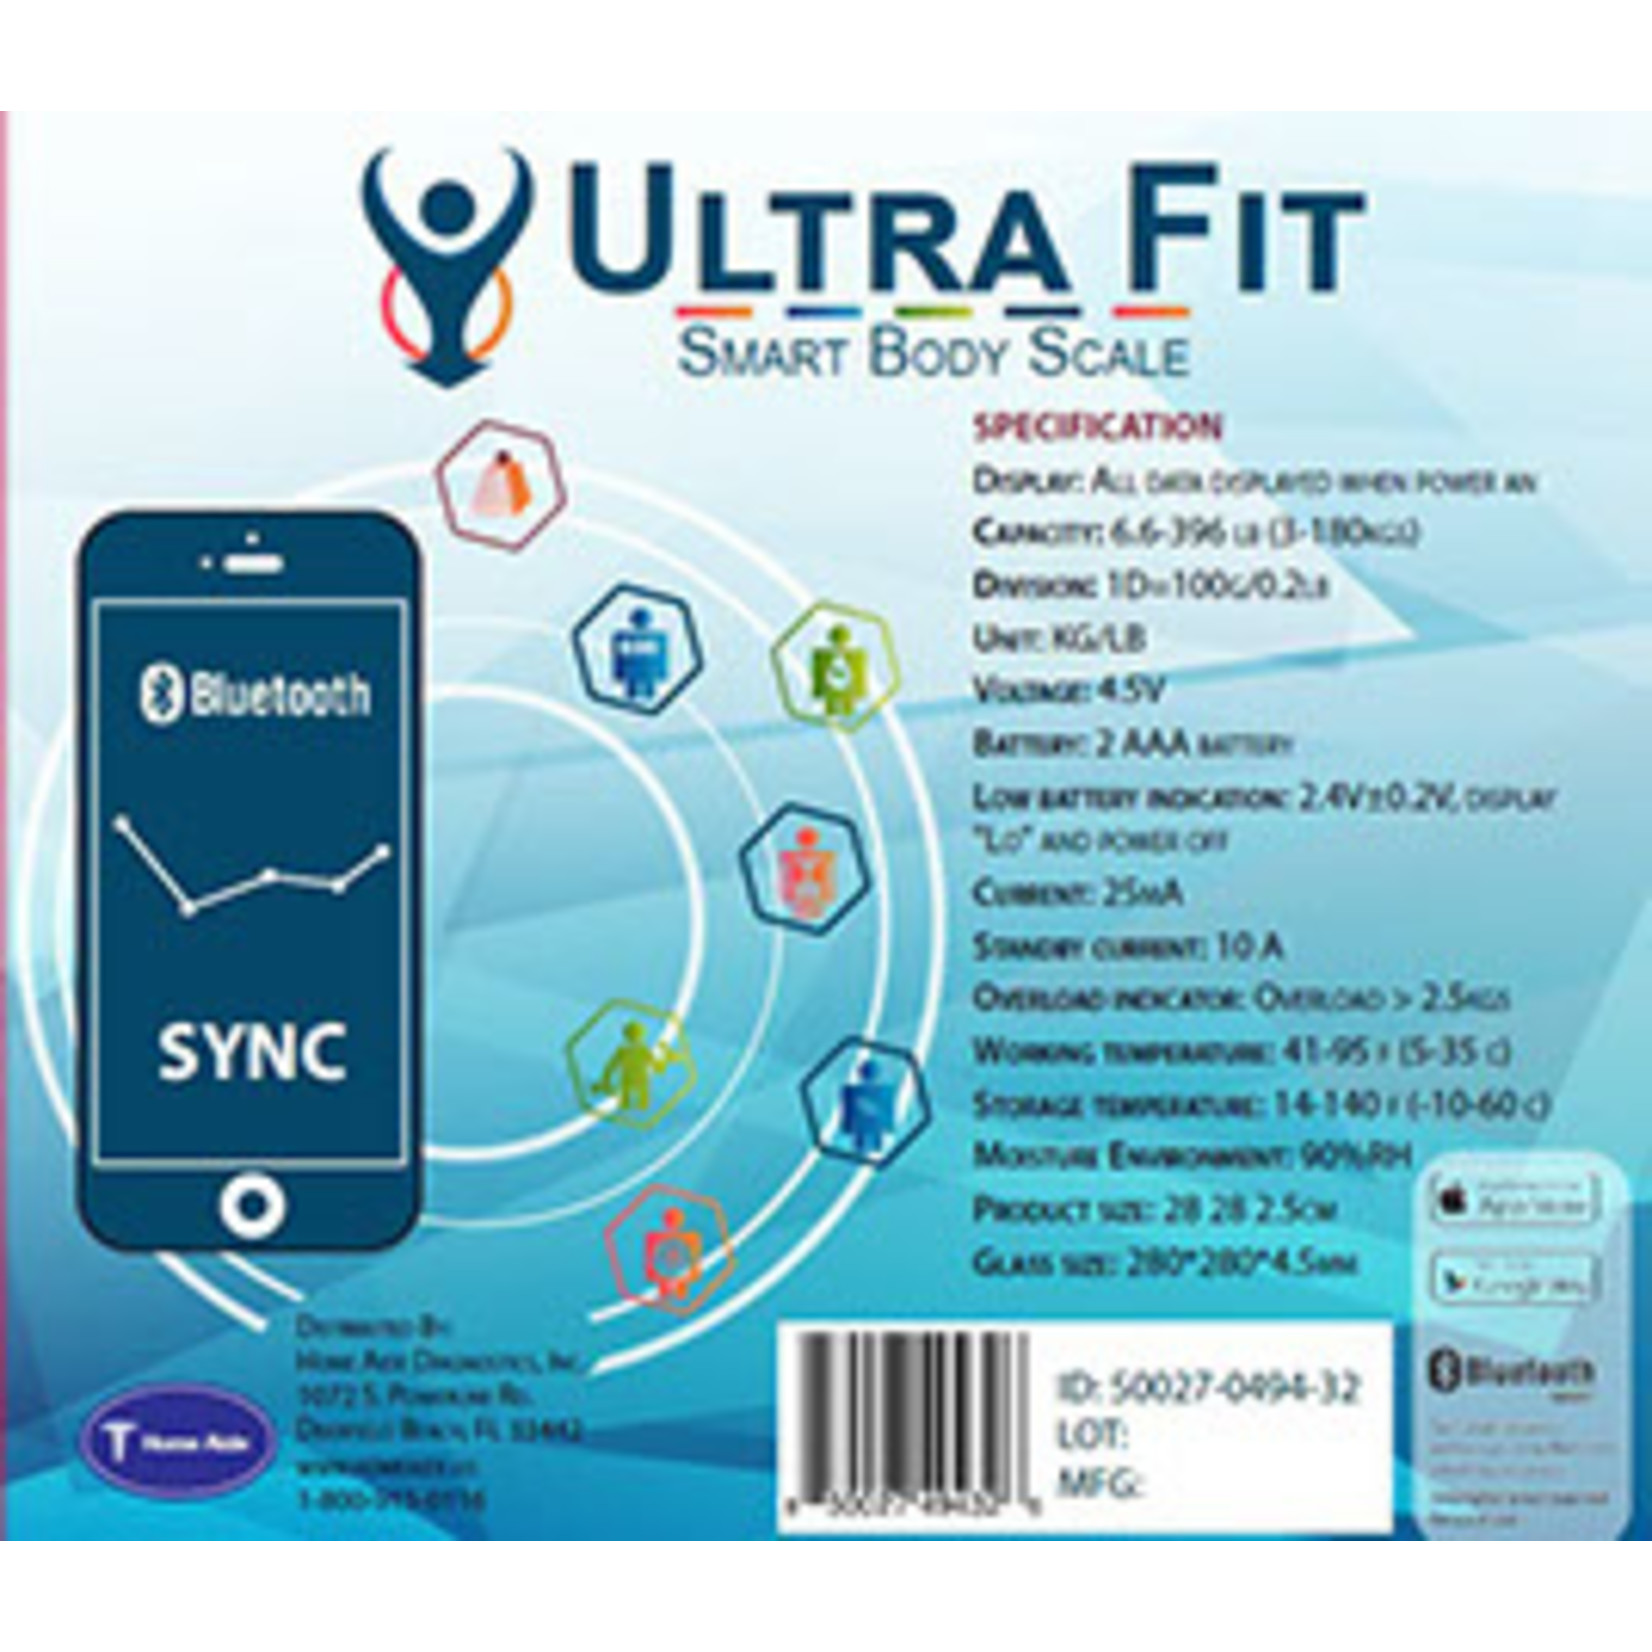 Ultra Fit Smart Body Scale - NDC # 50027-0494-32